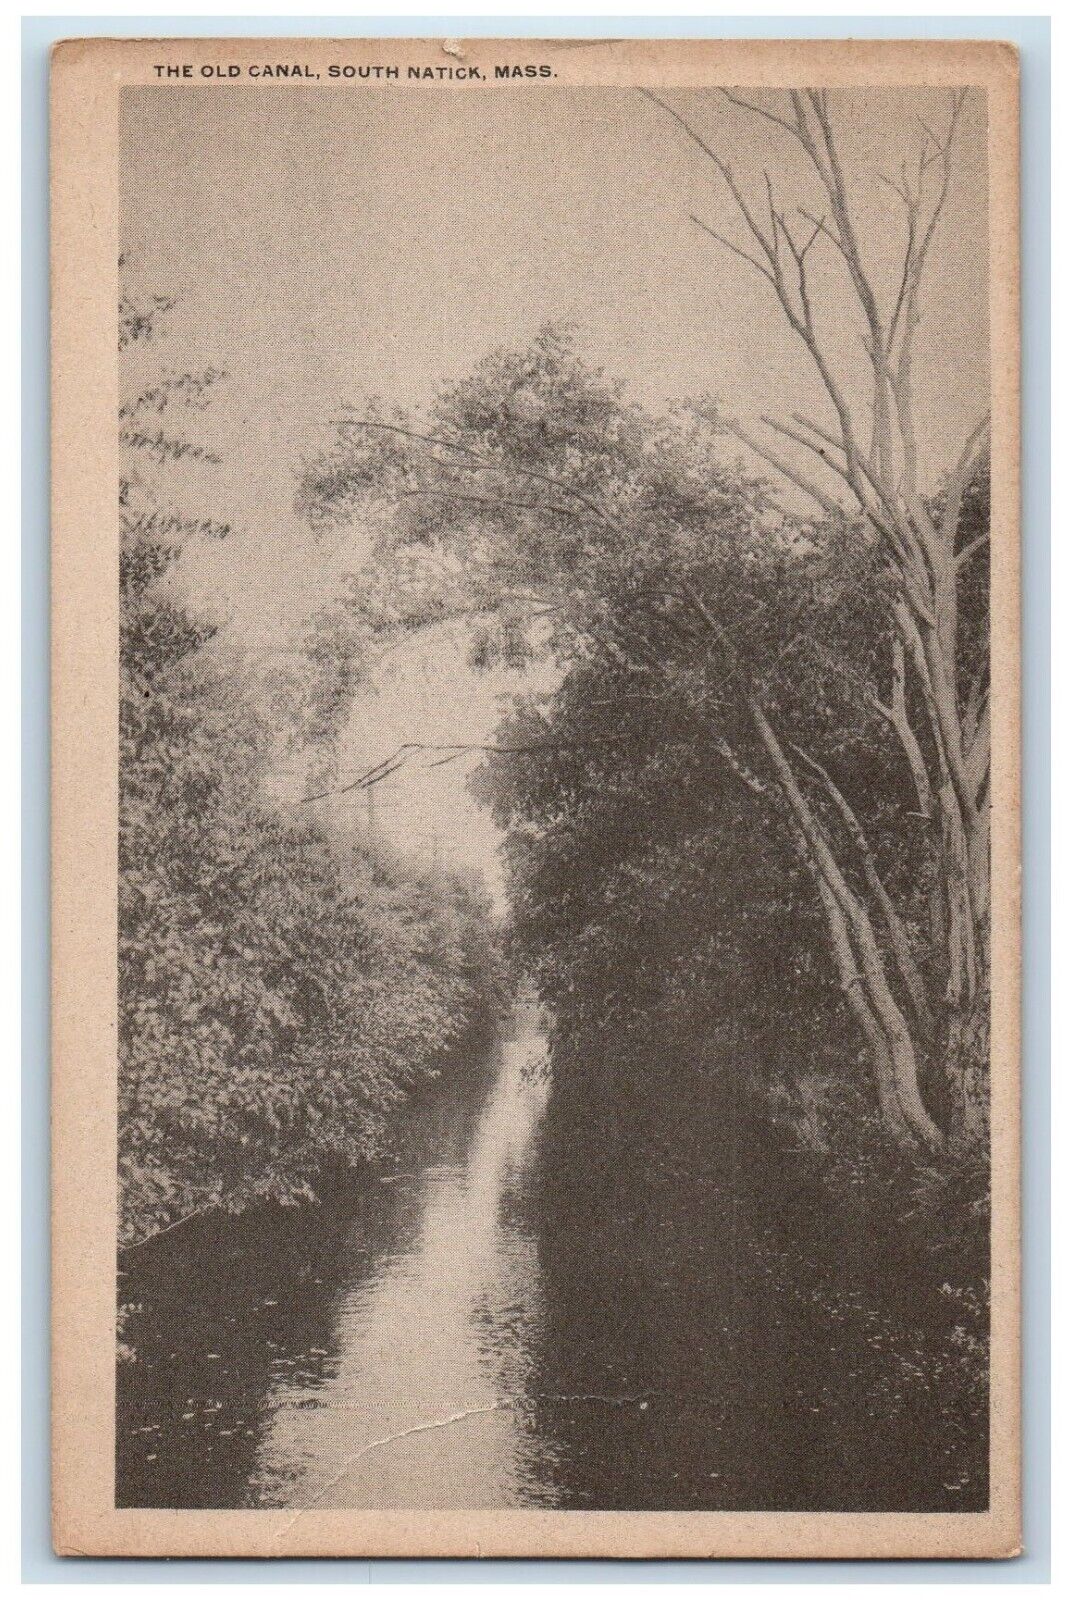 c1920 Old Canal River Lake South Natick Massachusetts Vintage Antique Postcard